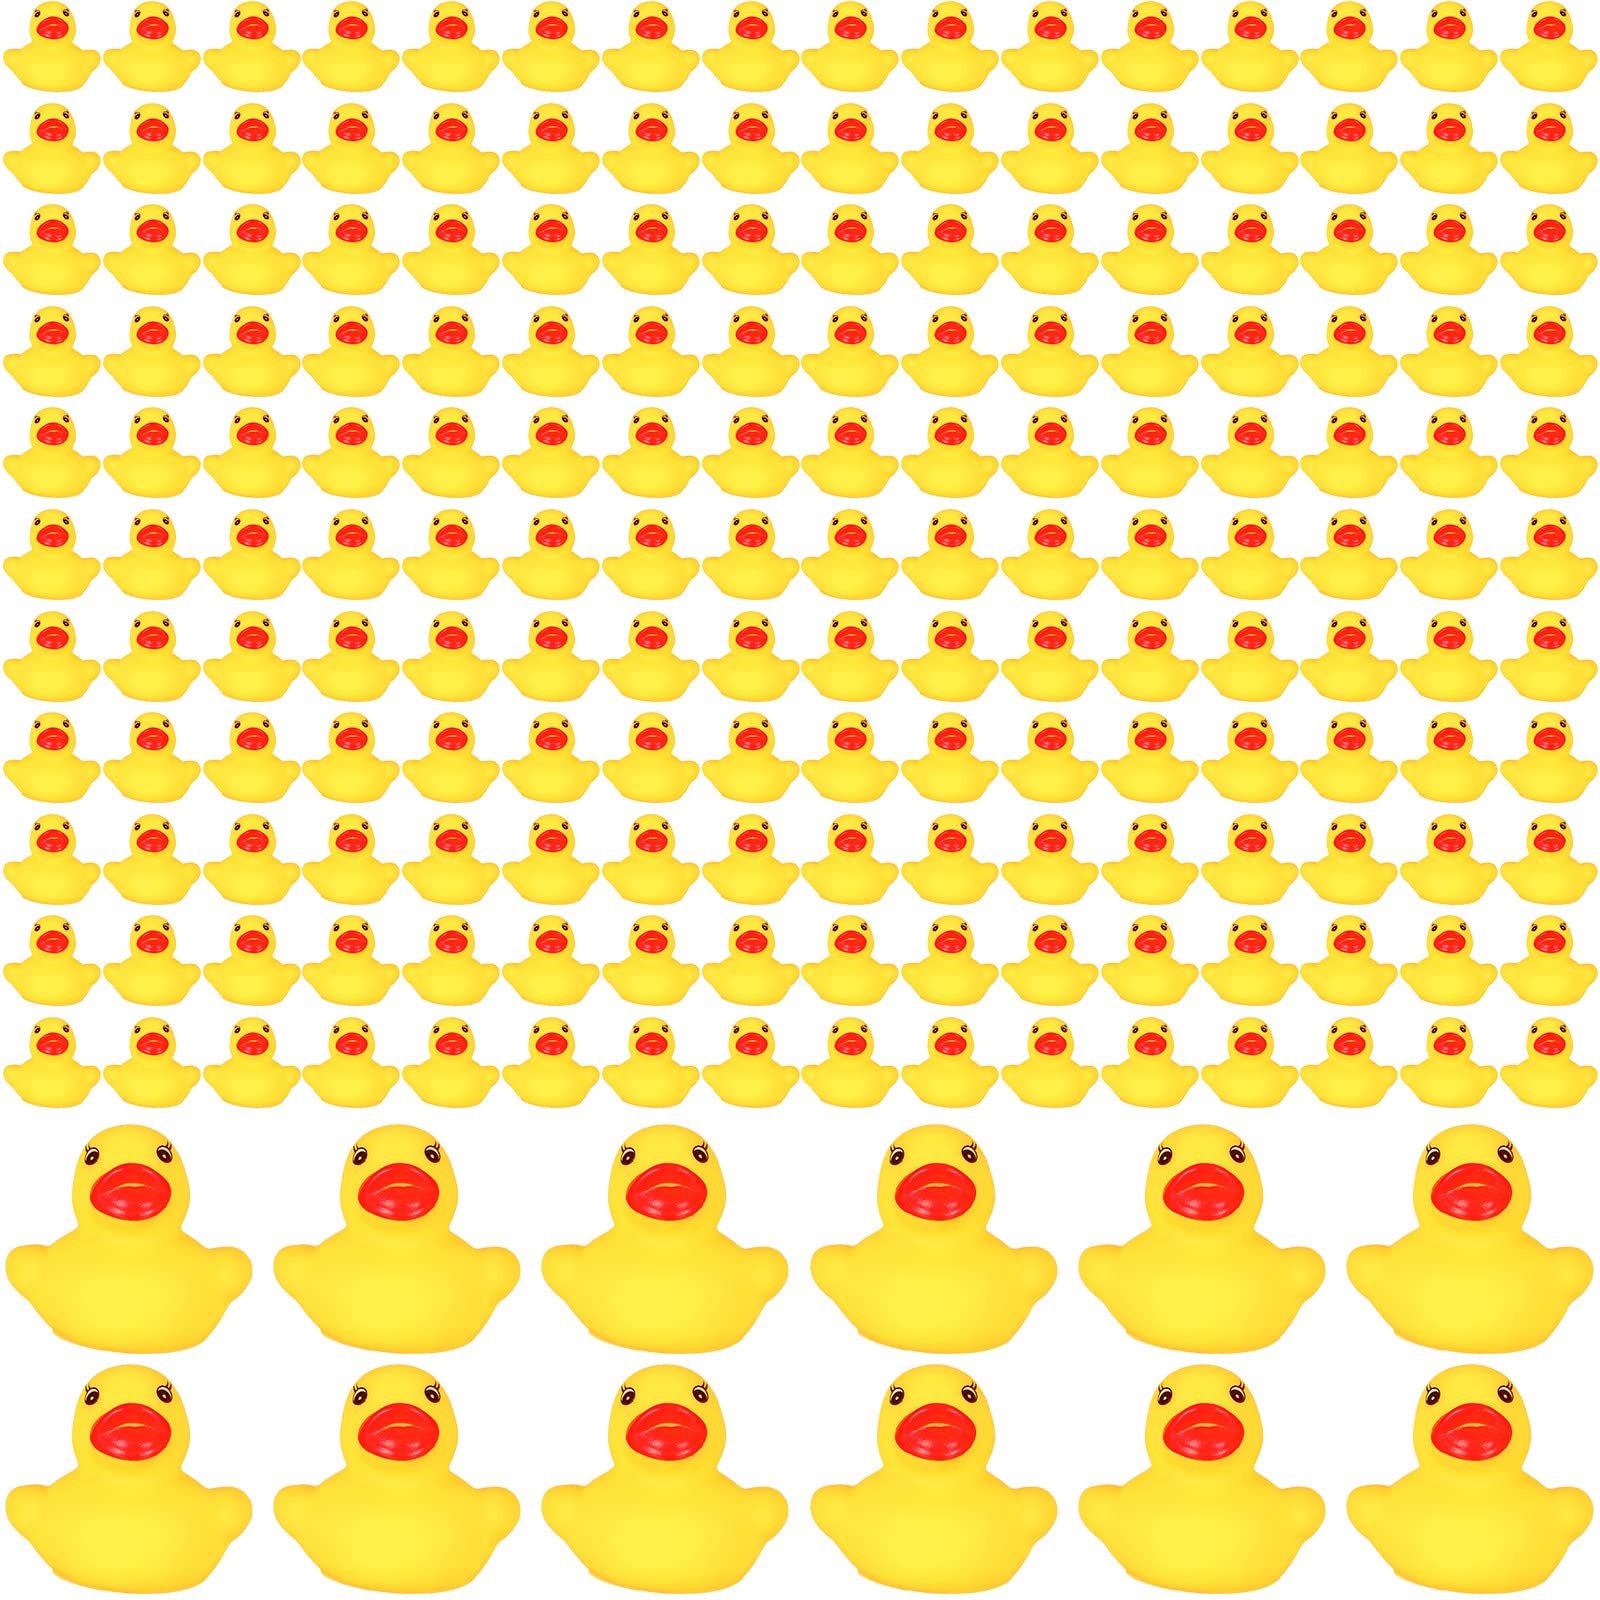 600 Pcs Mini Rubber Ducks in Bulk Bath Toy Squeak Tiny Ducks for Kids Bathtub Shower Birthday Favors Party Decoration Gift, 1.57 x 1.57 x 1.18 Inches (Yellow)